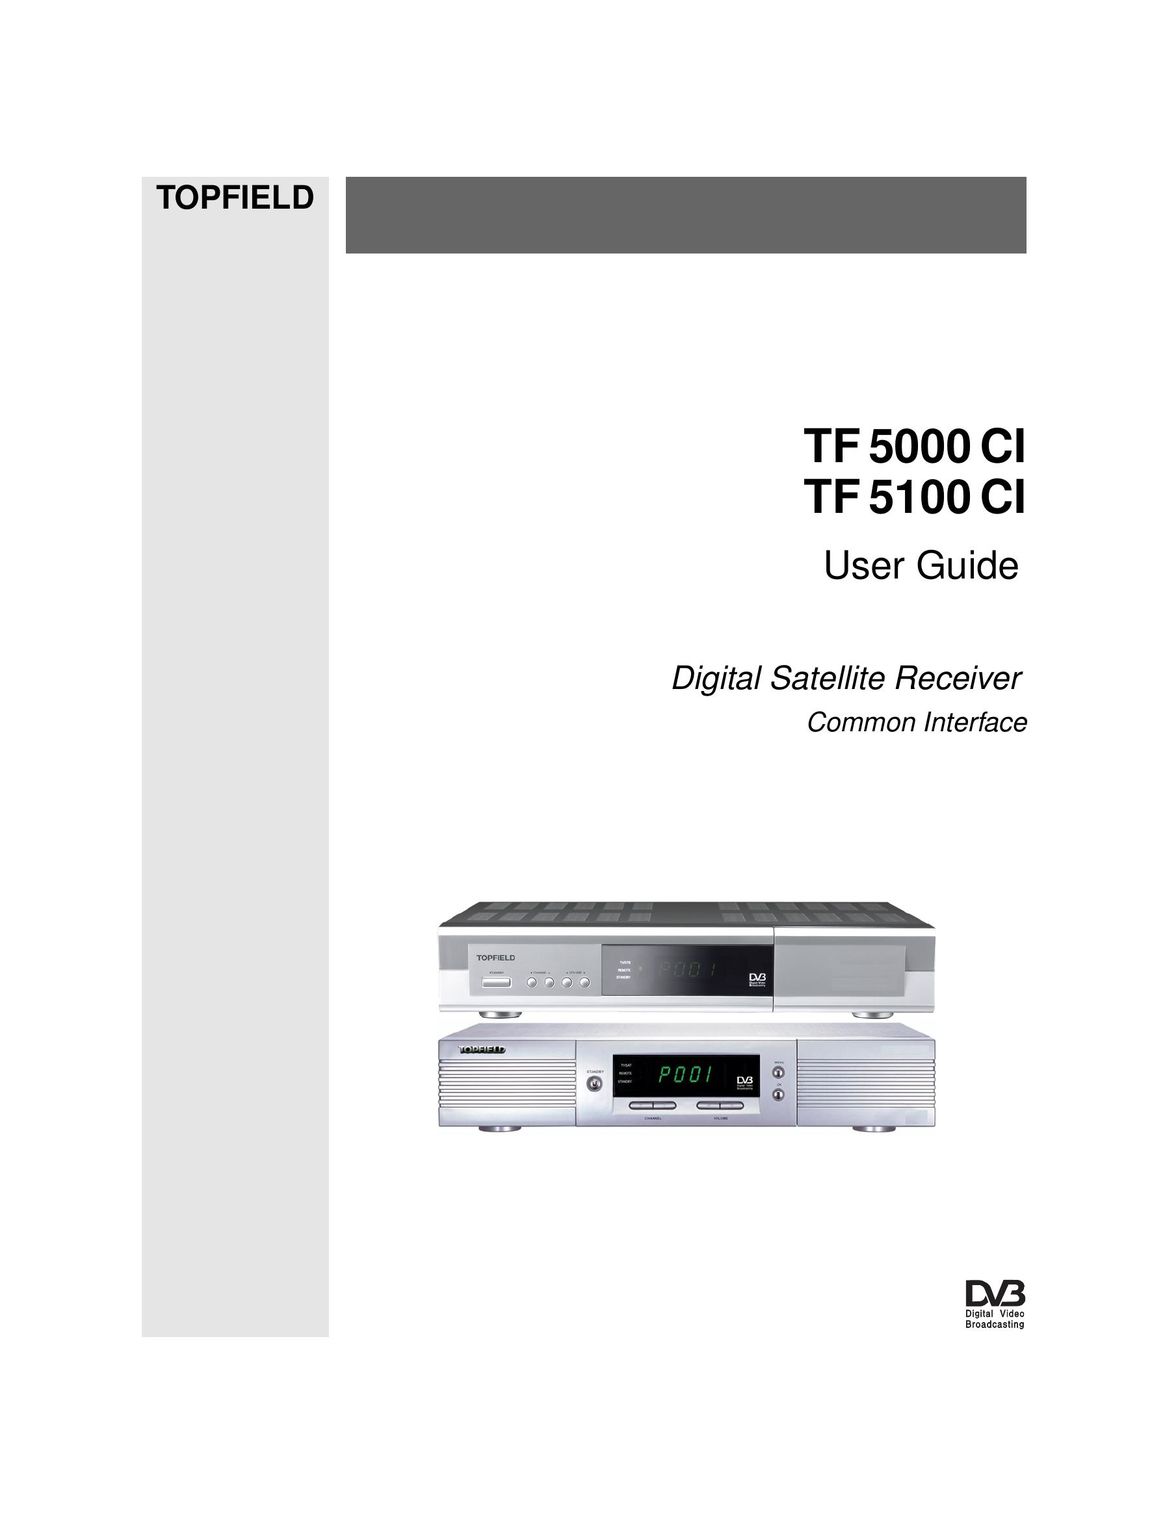 Topfield TF 5000 CI Satellite TV System User Manual